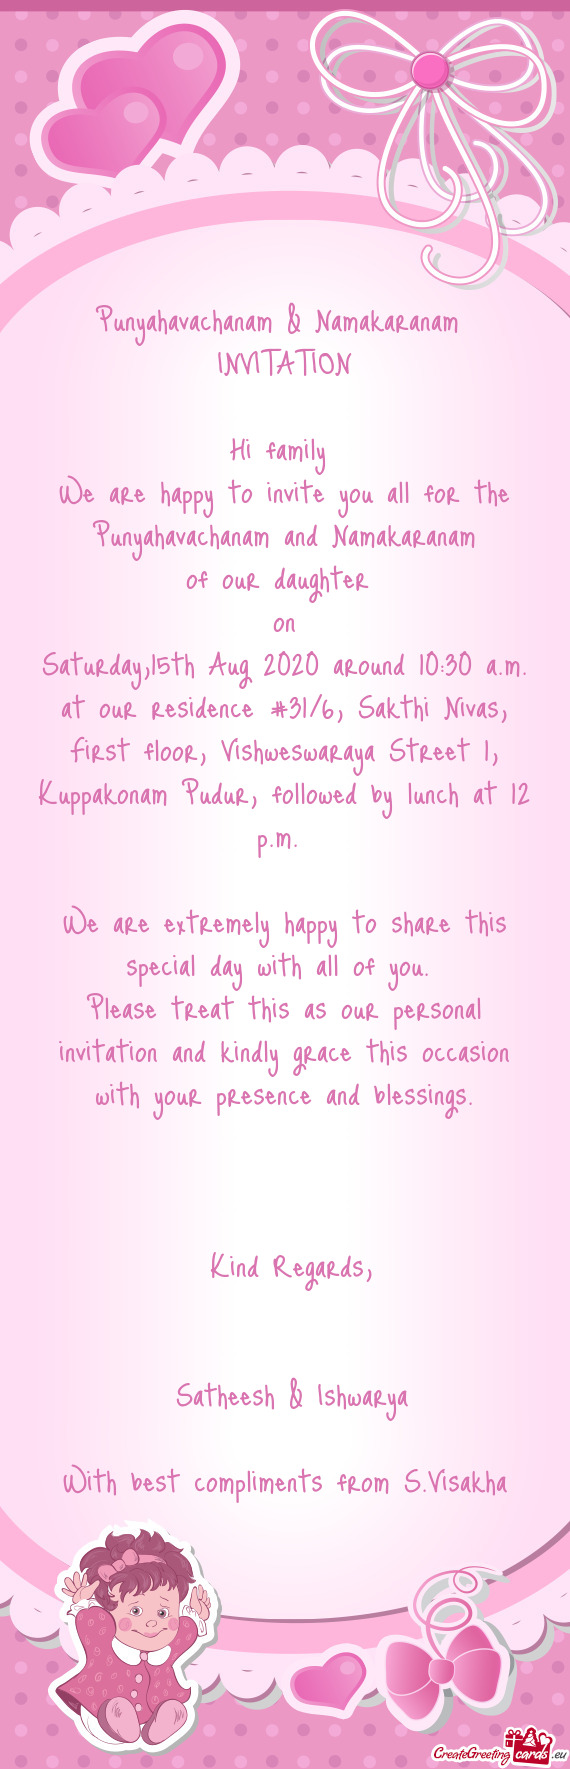 Saturday,15th Aug 2020 around 10:30 a.m. at our residence #31/6, Sakthi Nivas, First floor, Vishwesw